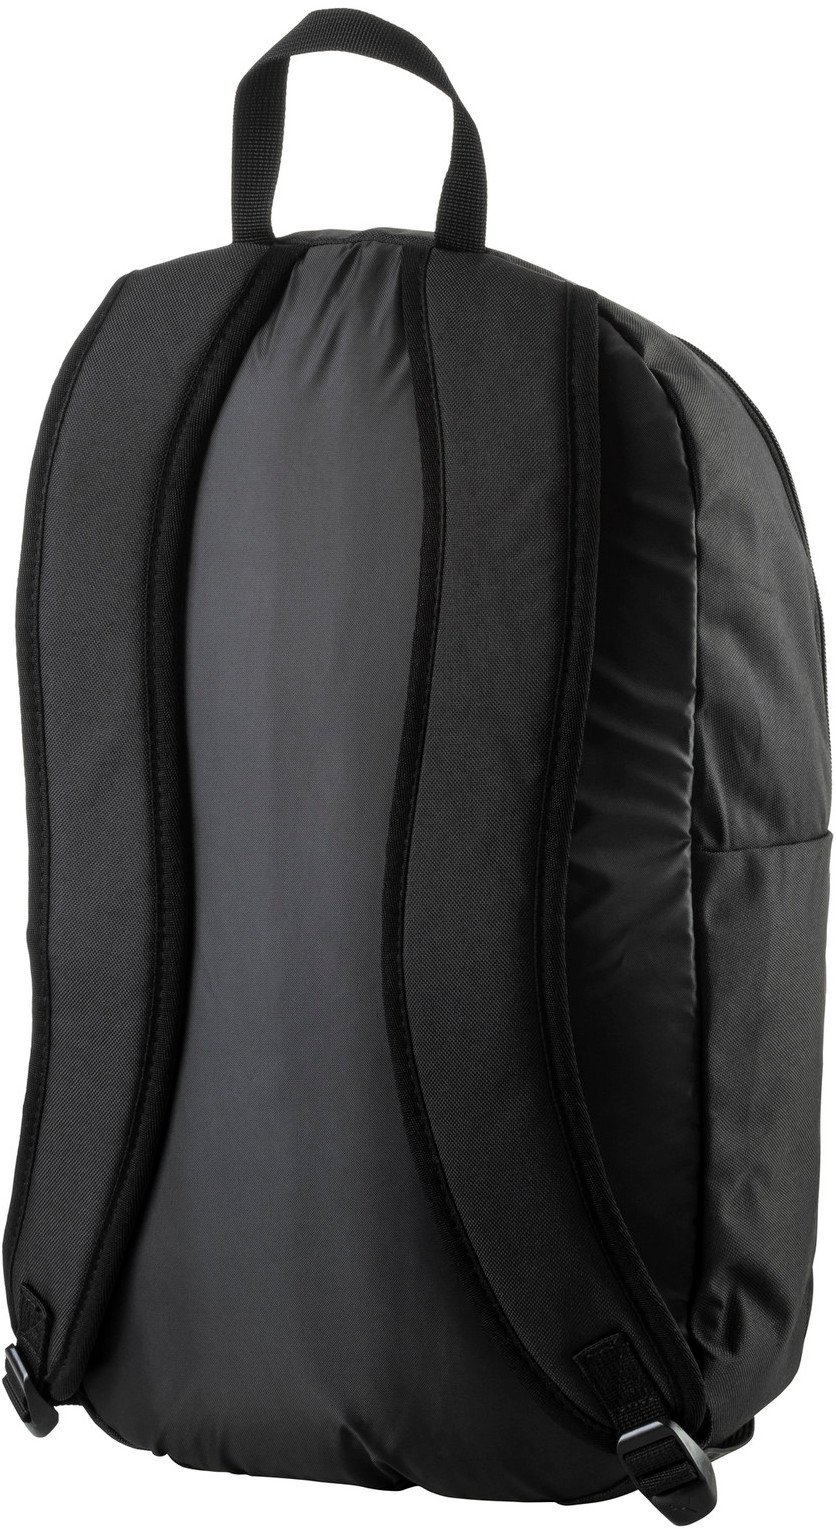 puma pro training backpack